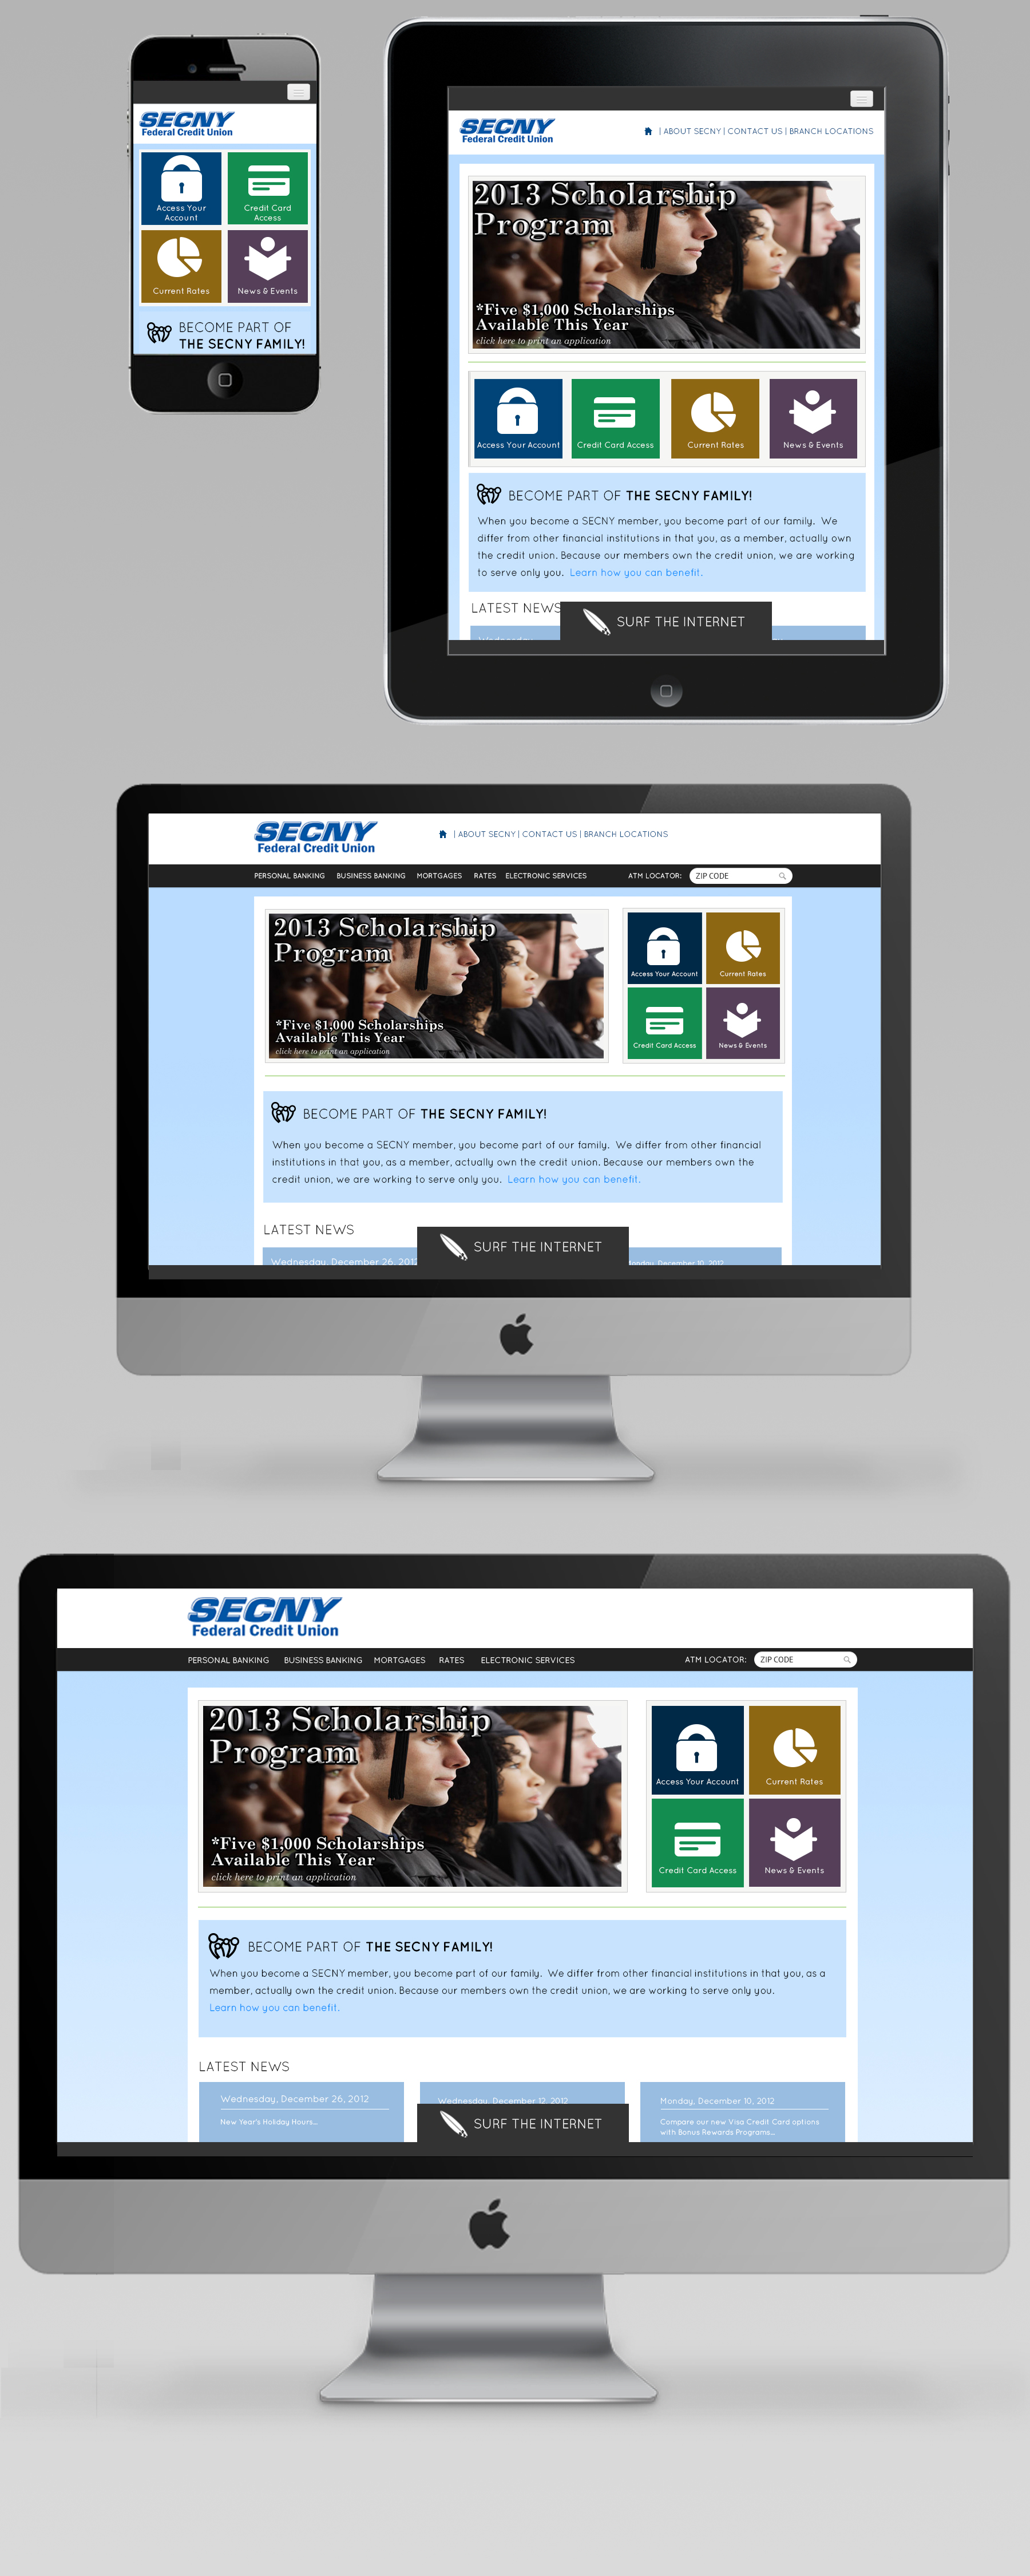 secny new web design by ACS Web Design & SEO